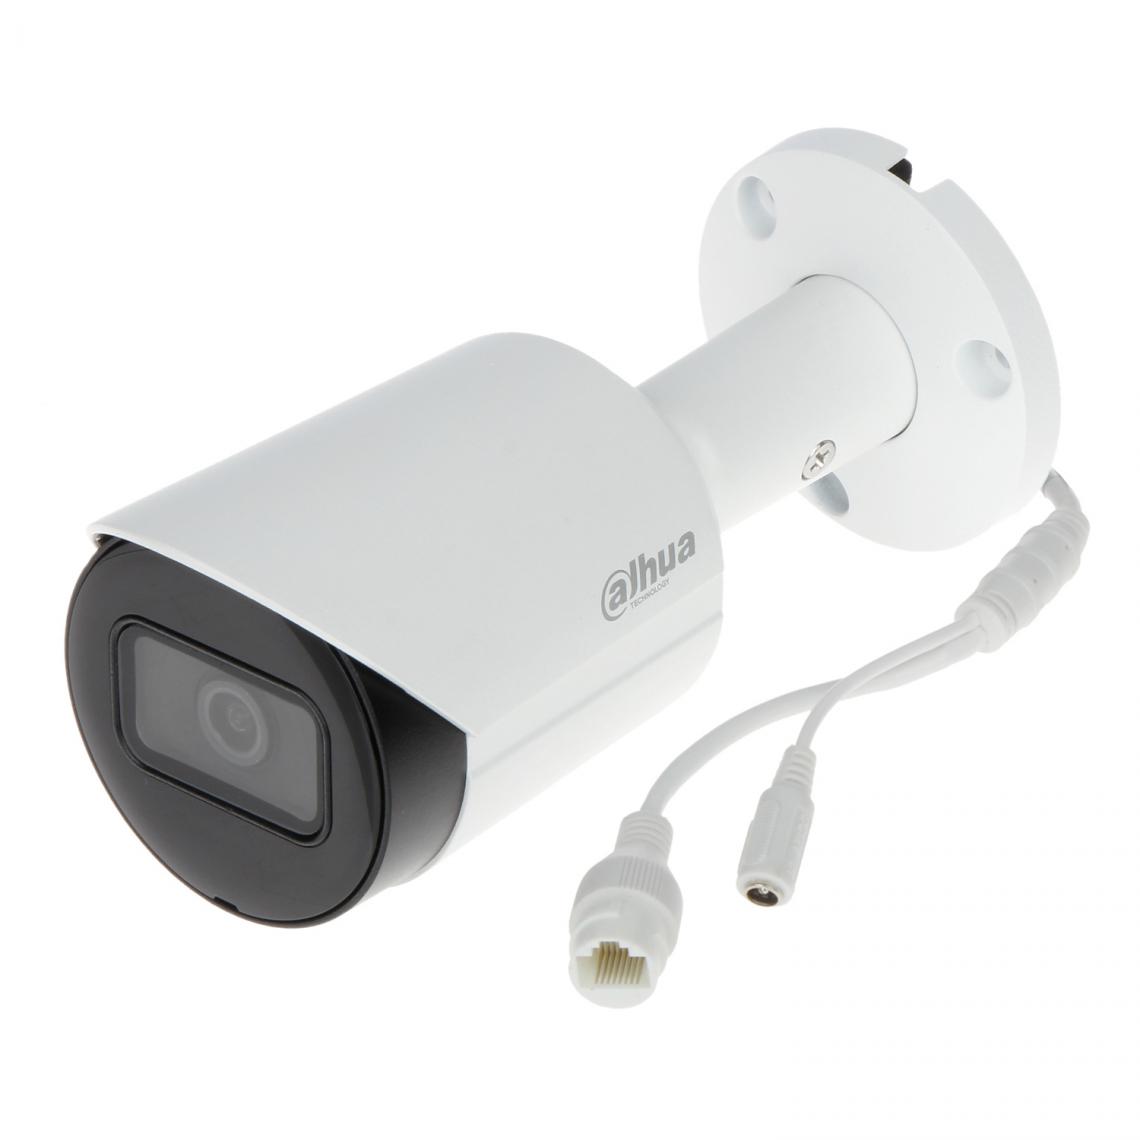 Dahua - Caméra De Surveillance Réseau Dahua Ipchfw 2230 S-s-s 2 - Caméra de surveillance connectée